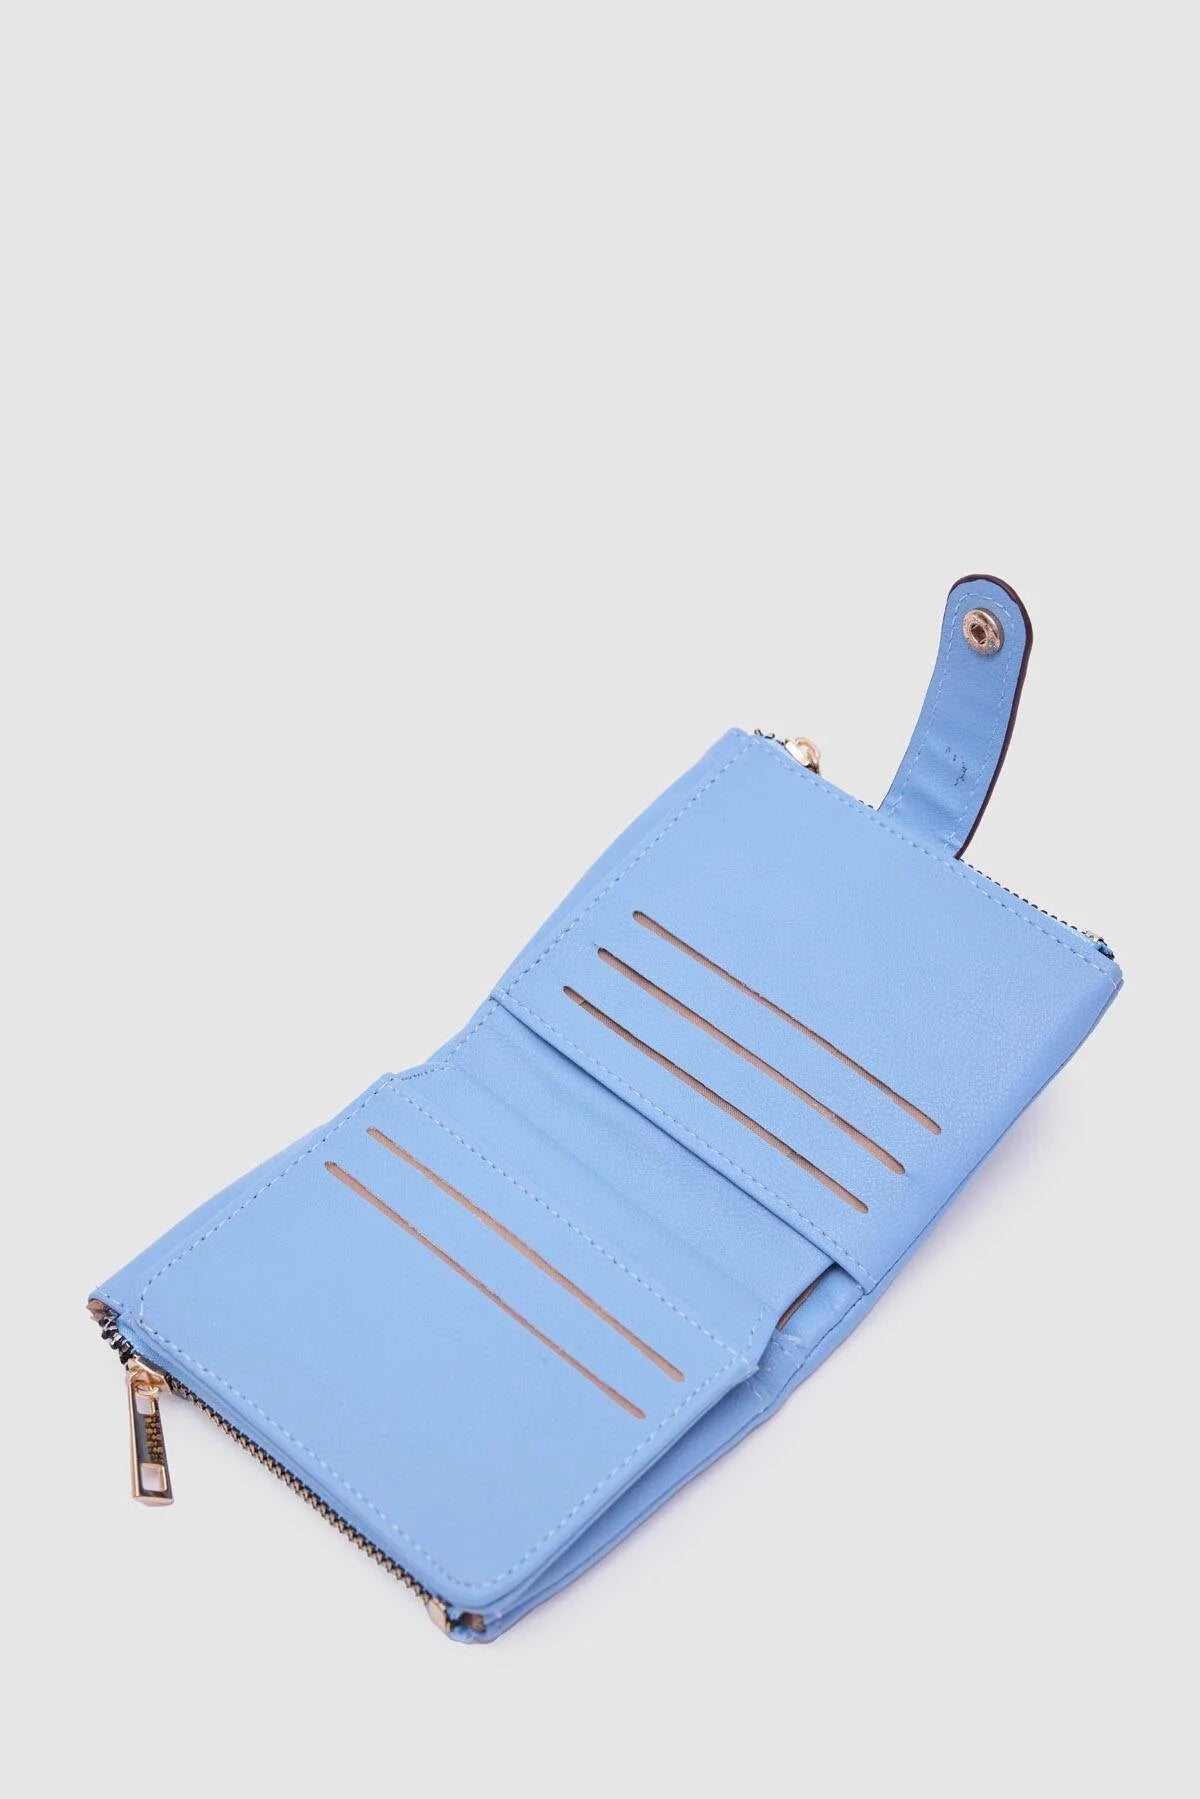 Soft Leather Blue Wallet wallet LUNARITY GARAGE   